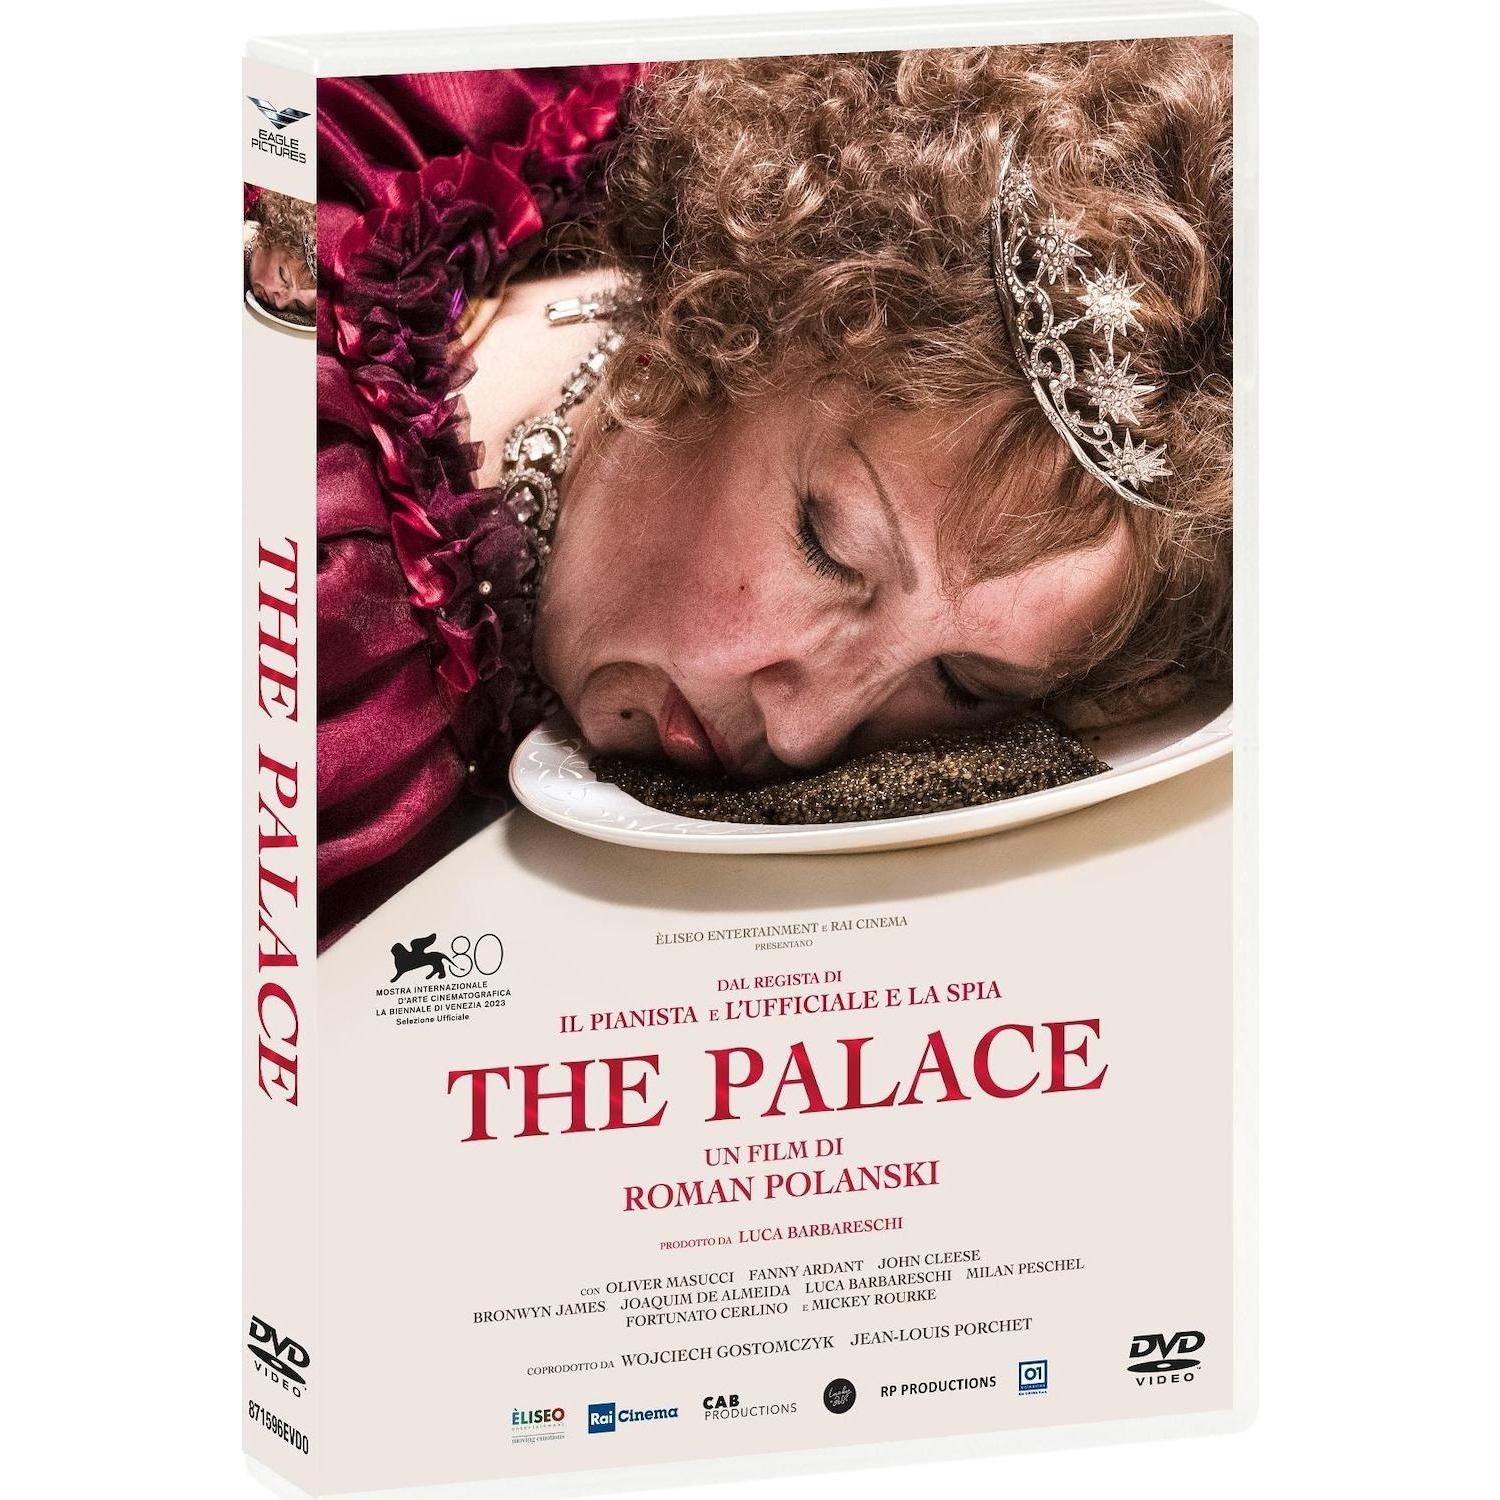 Immagine per DVD The Palace da DIMOStore